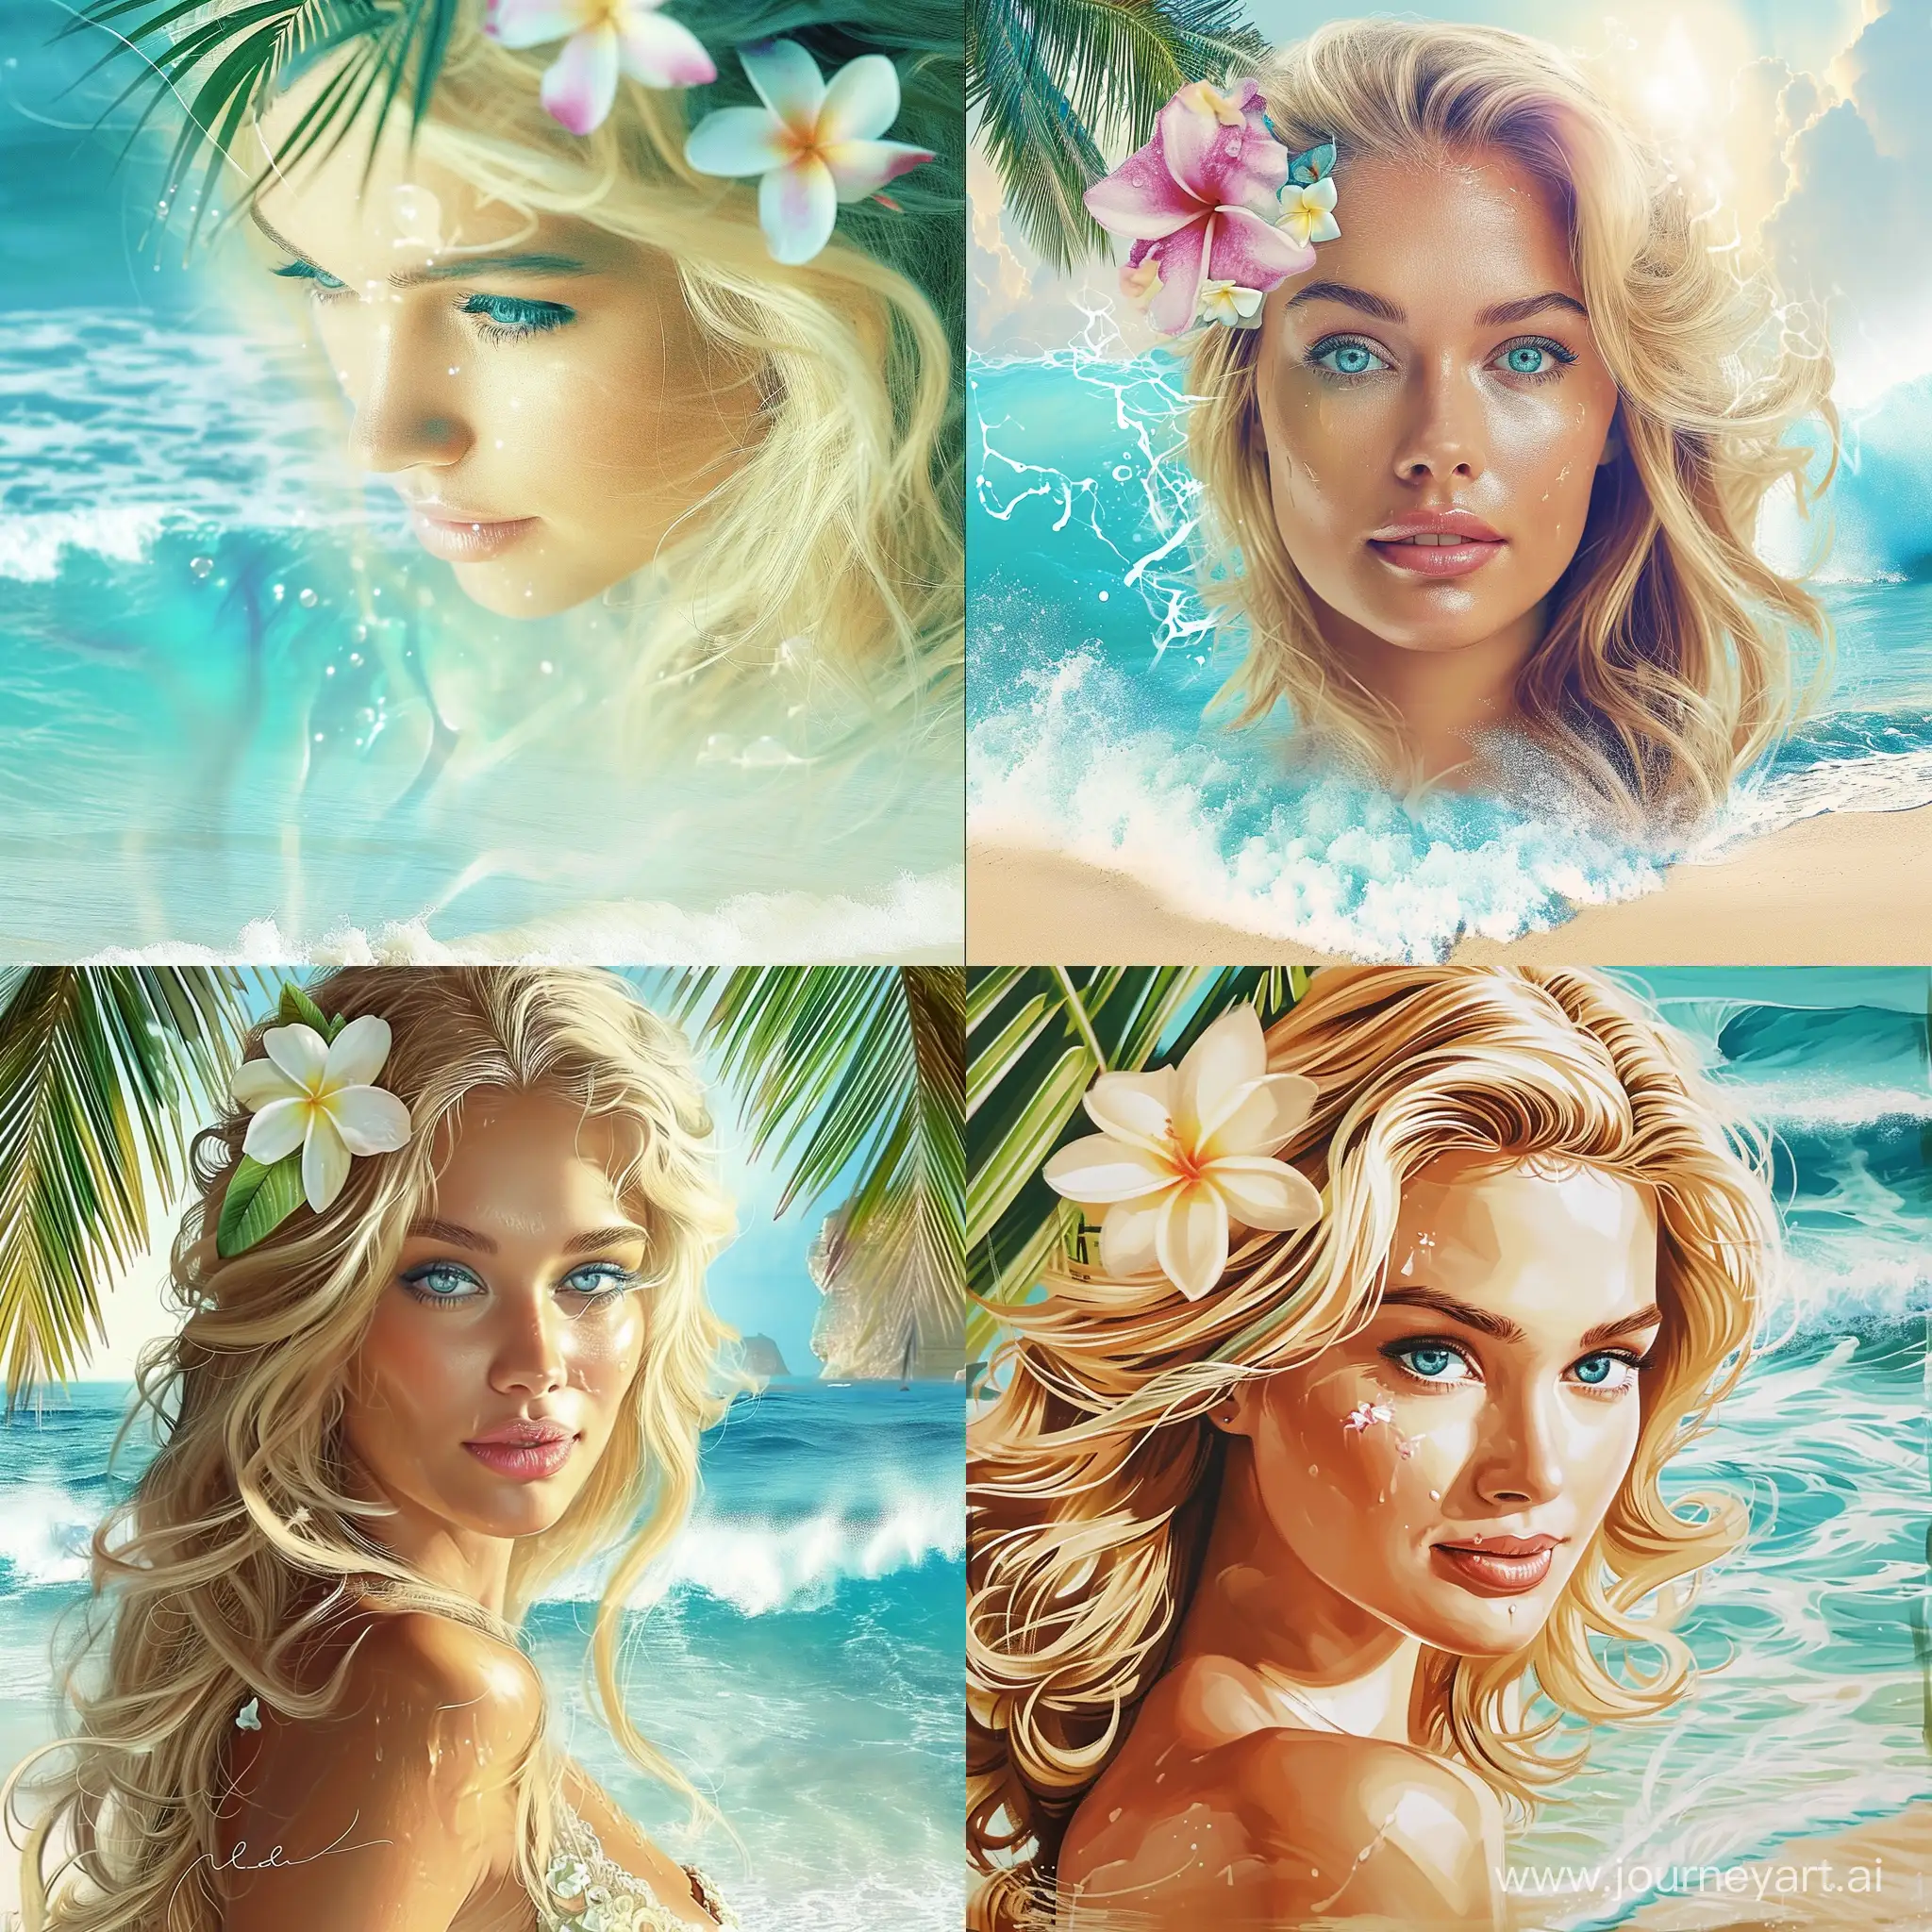 Blonde-Woman-with-Flower-in-Hair-Enjoying-Tropical-Beach-Paradise